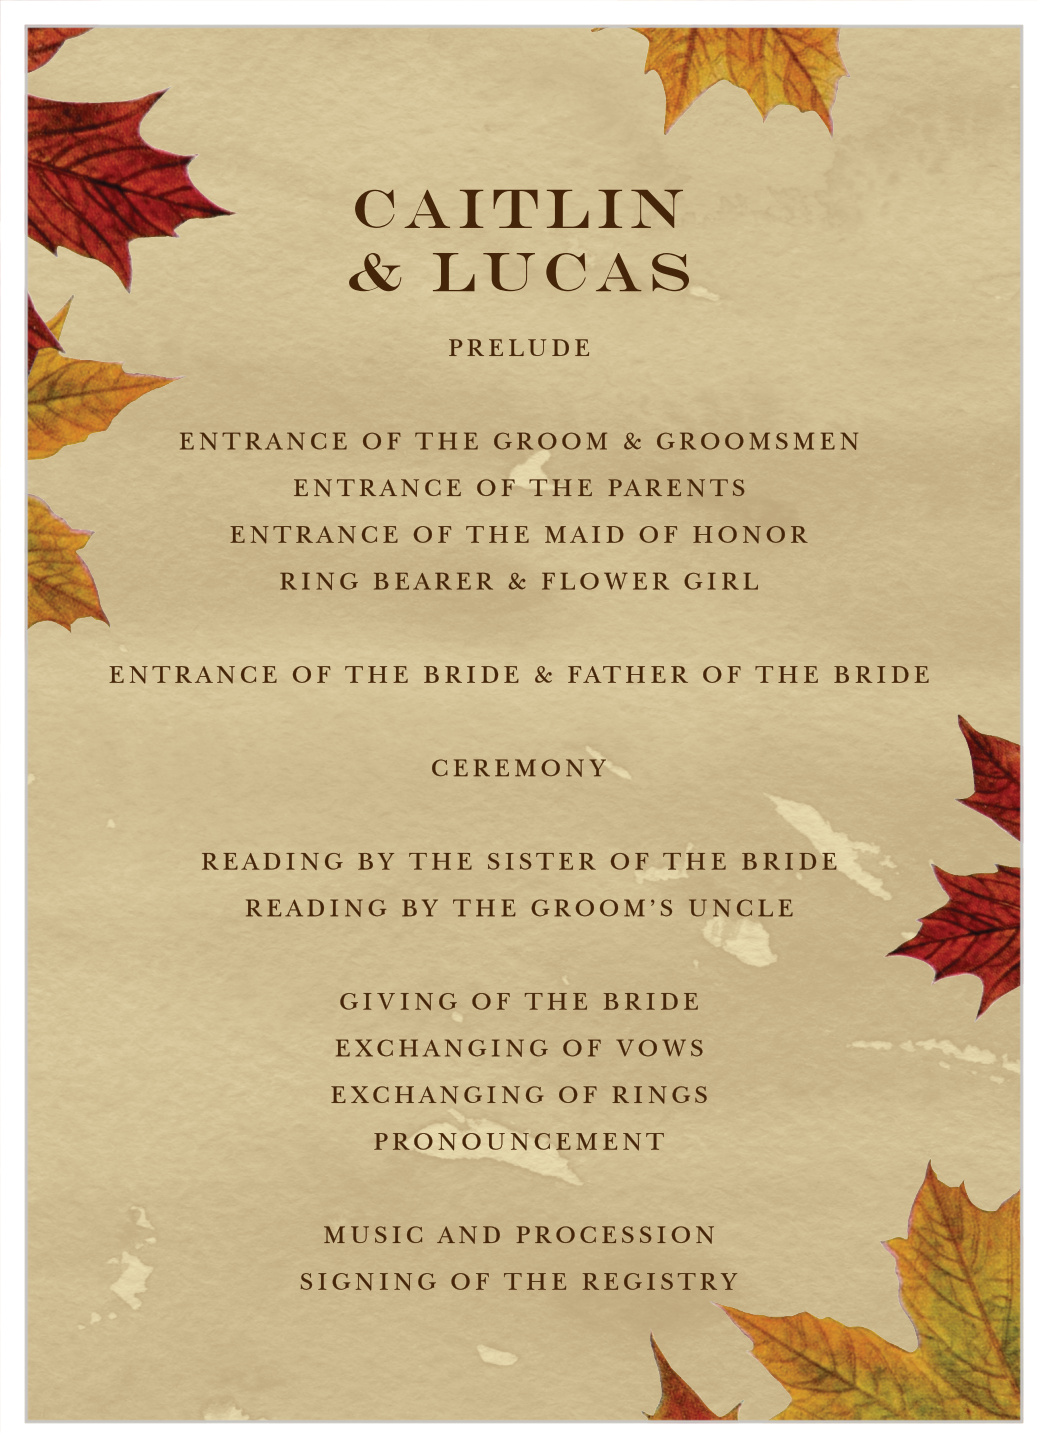 Leaves of Fall Wedding Programs